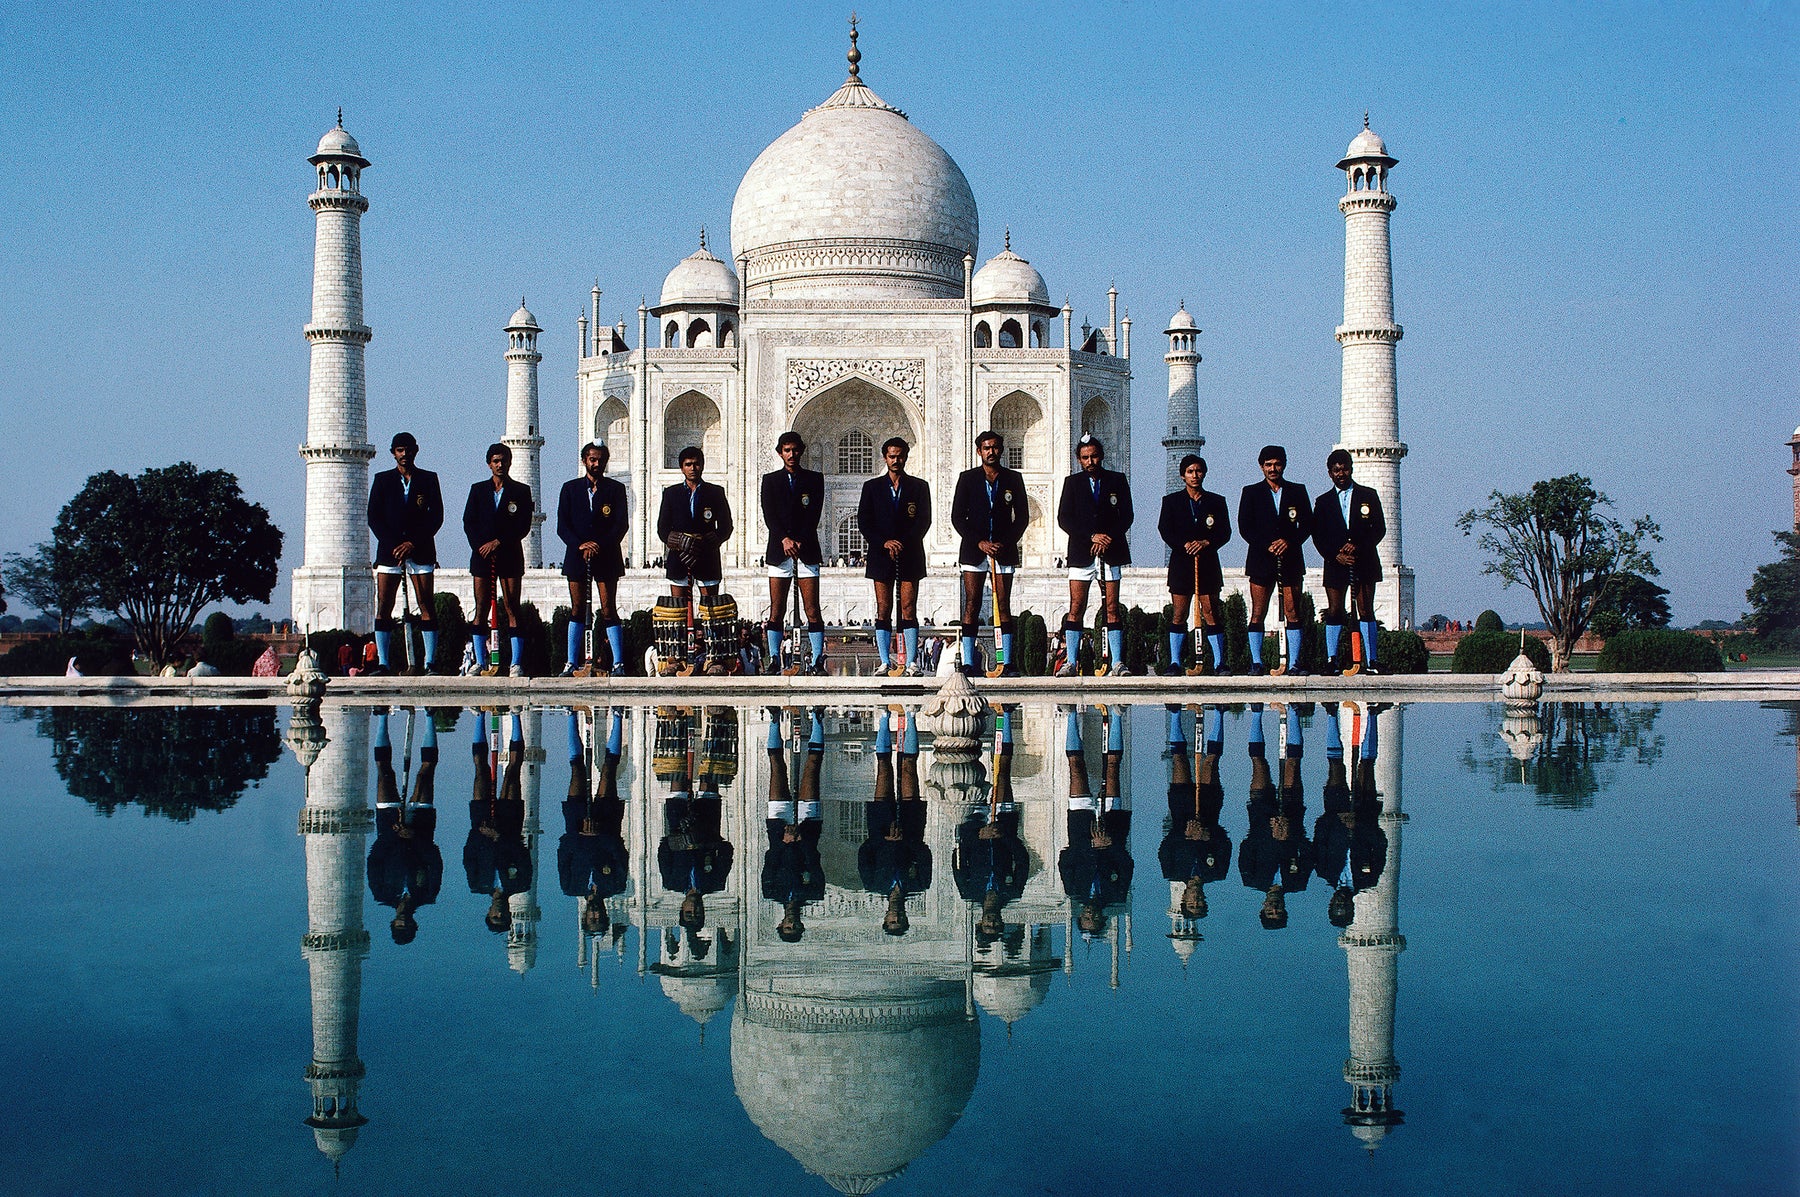 Indian Field Hockey Team at the Taj Mahal